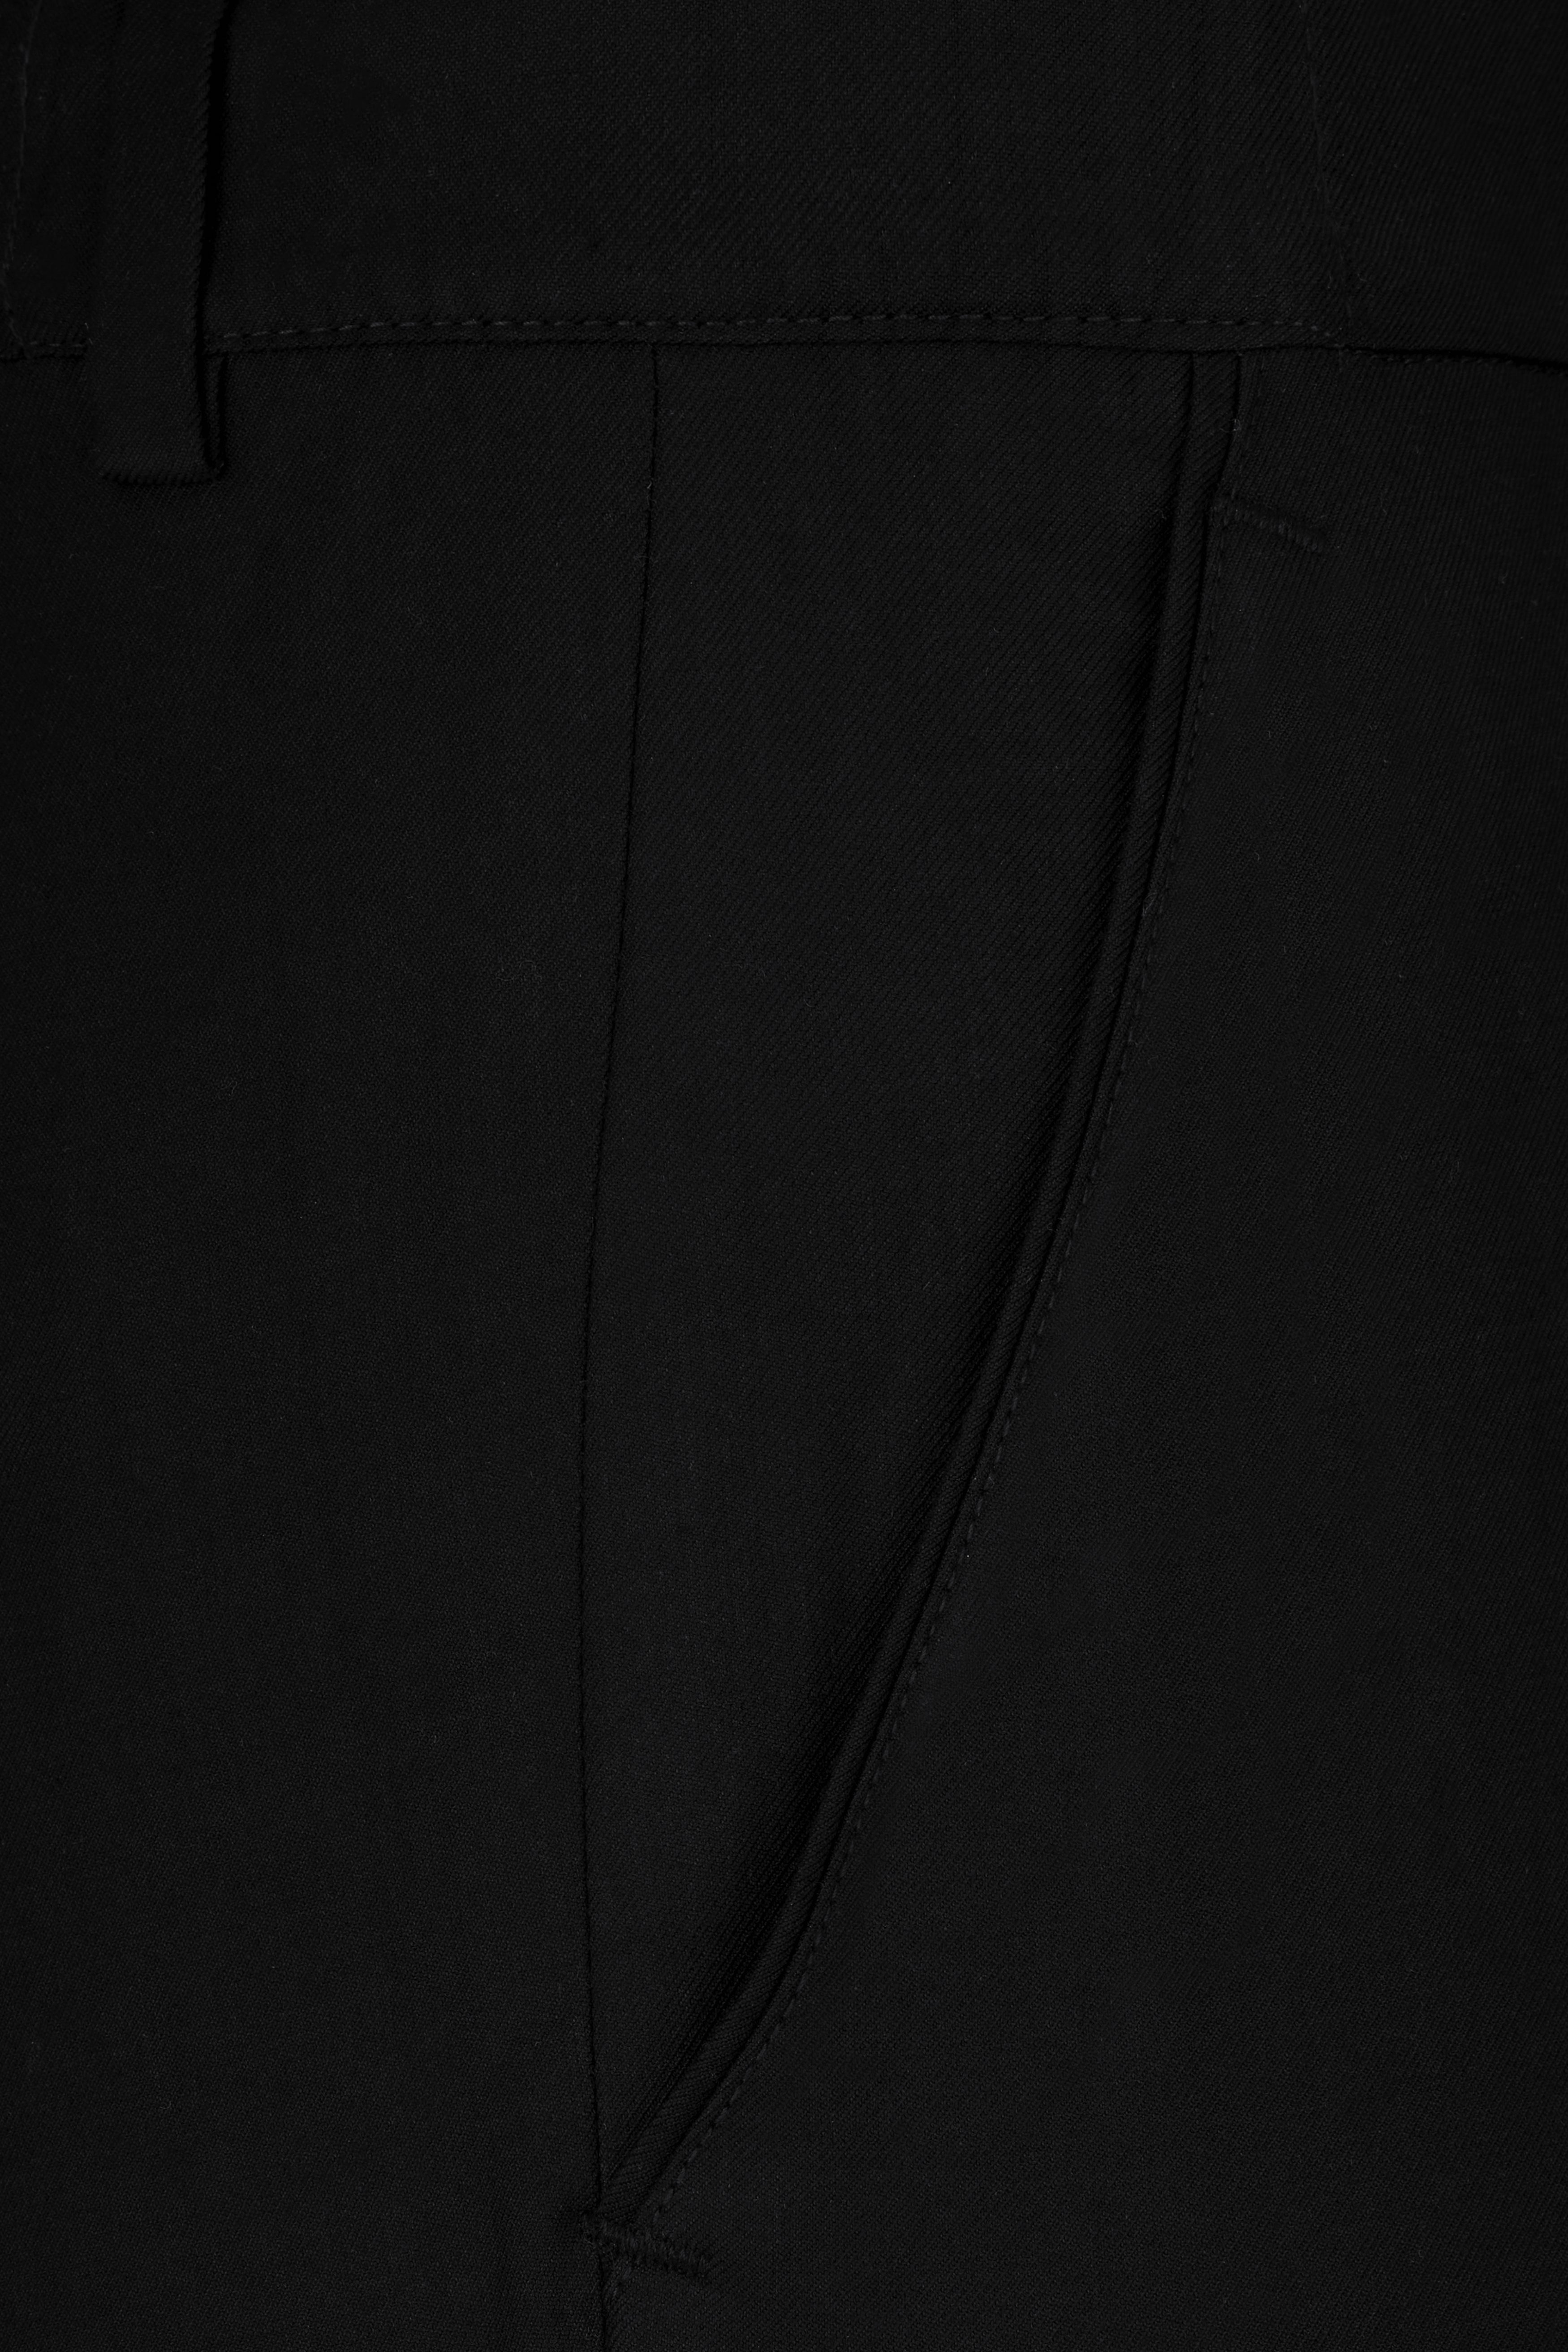 Jade Black Wool Rich Tuxedo Designer Suit ST2804-KWLP-D478-36, ST2804-KWLP-D478-38, ST2804-KWLP-D478-40, ST2804-KWLP-D478-42, ST2804-KWLP-D478-44, ST2804-KWLP-D478-46, ST2804-KWLP-D478-48, ST2804-KWLP-D478-50, ST2804-KWLP-D478-52, ST2804-KWLP-D478-54, ST2804-KWLP-D478-56, ST2804-KWLP-D478-58, ST2804-KWLP-D478-60